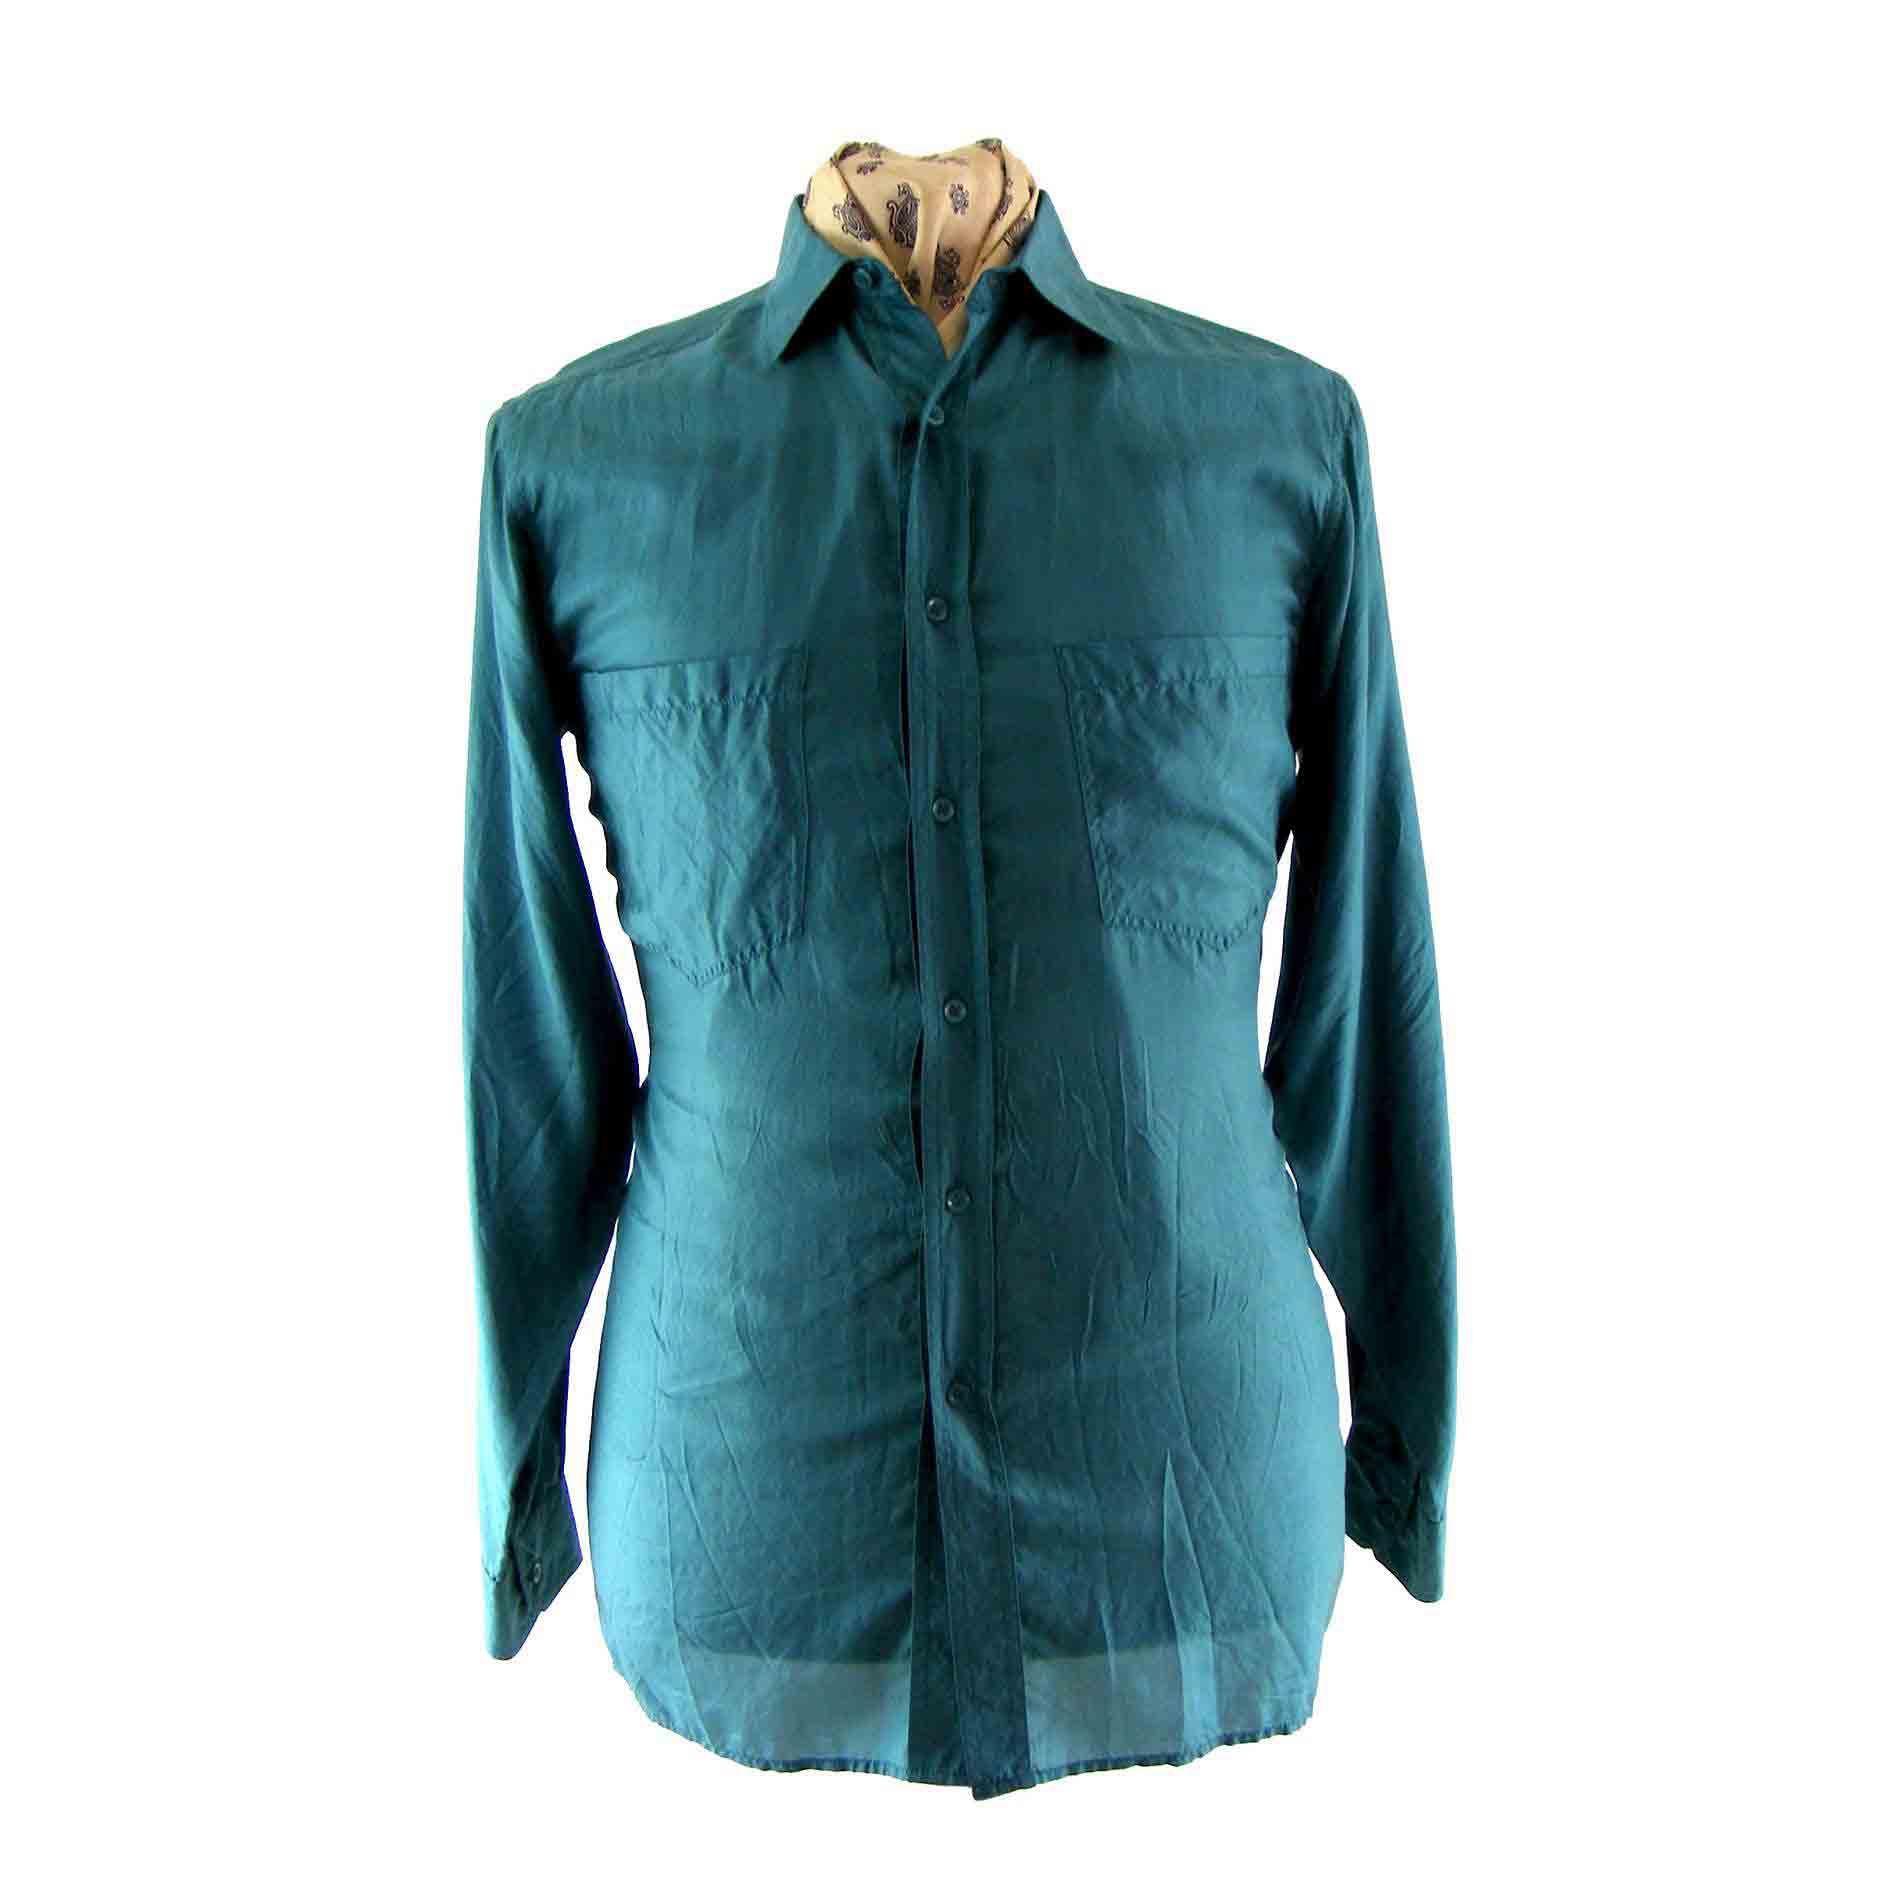 Mens Vintage 90s silk shirt - Blue 17 Vintage Clothing